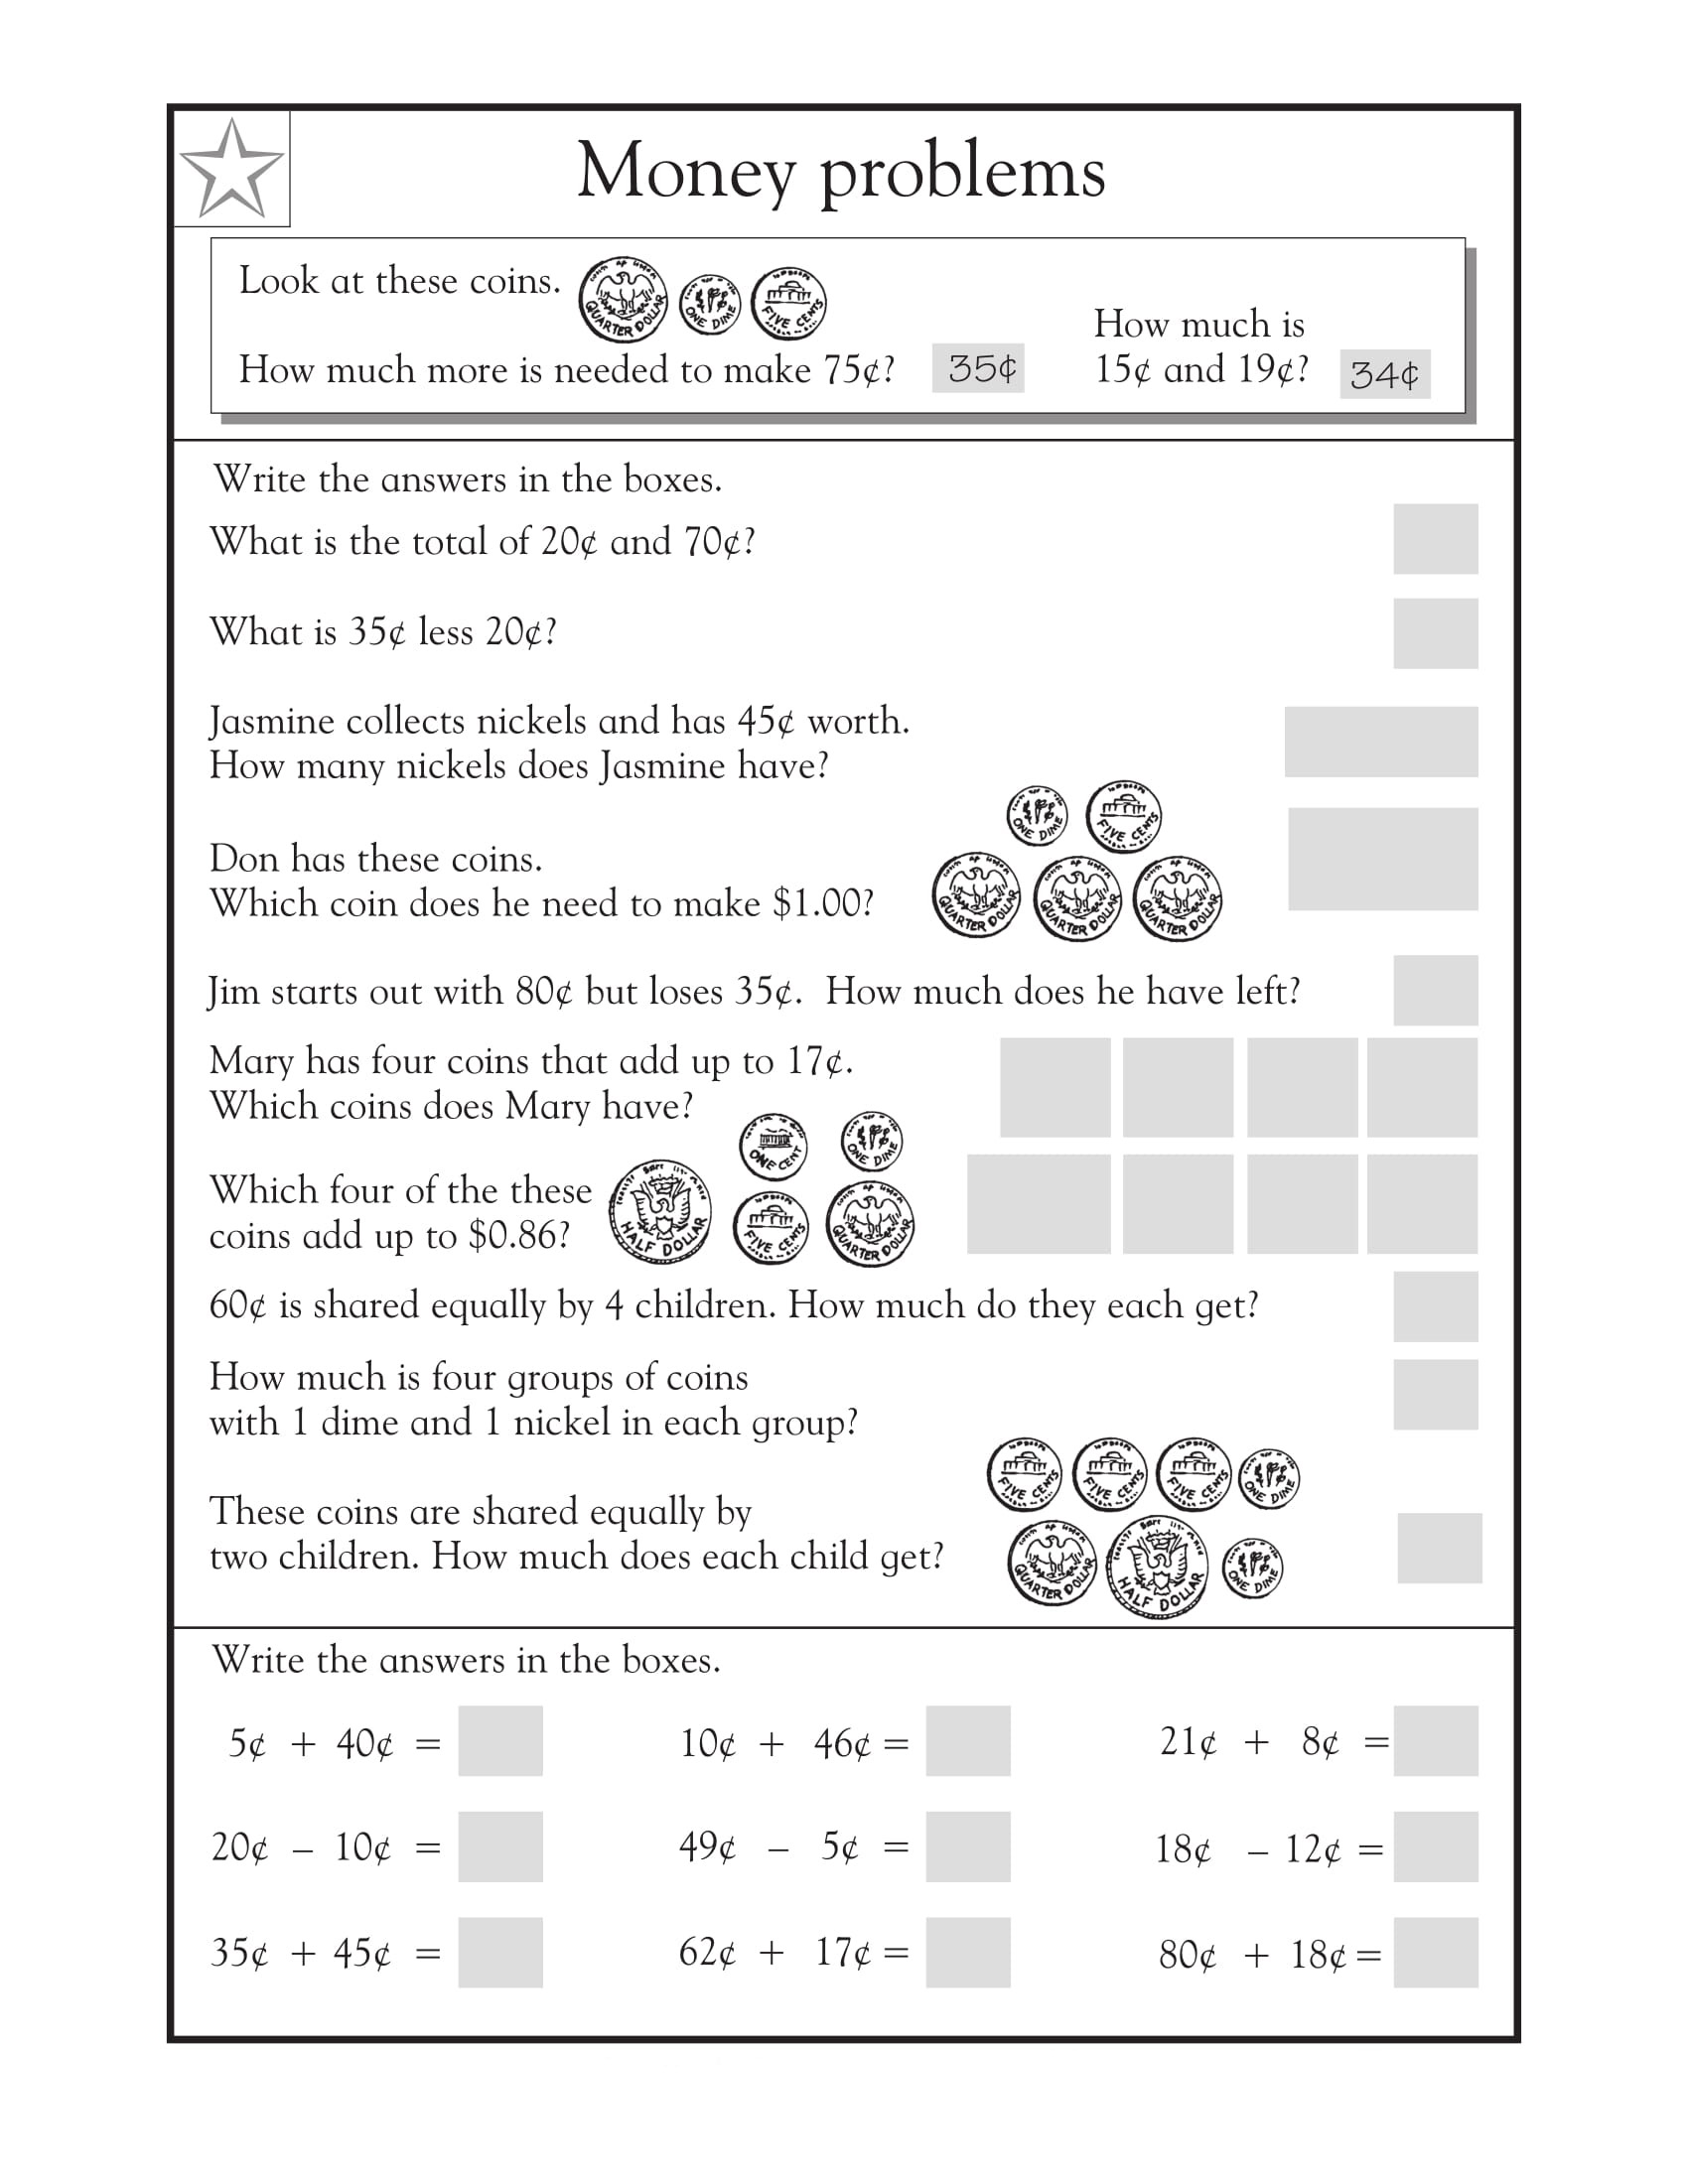 multiplication-word-problem-worksheets-3rd-grade-3rd-grade-math-word